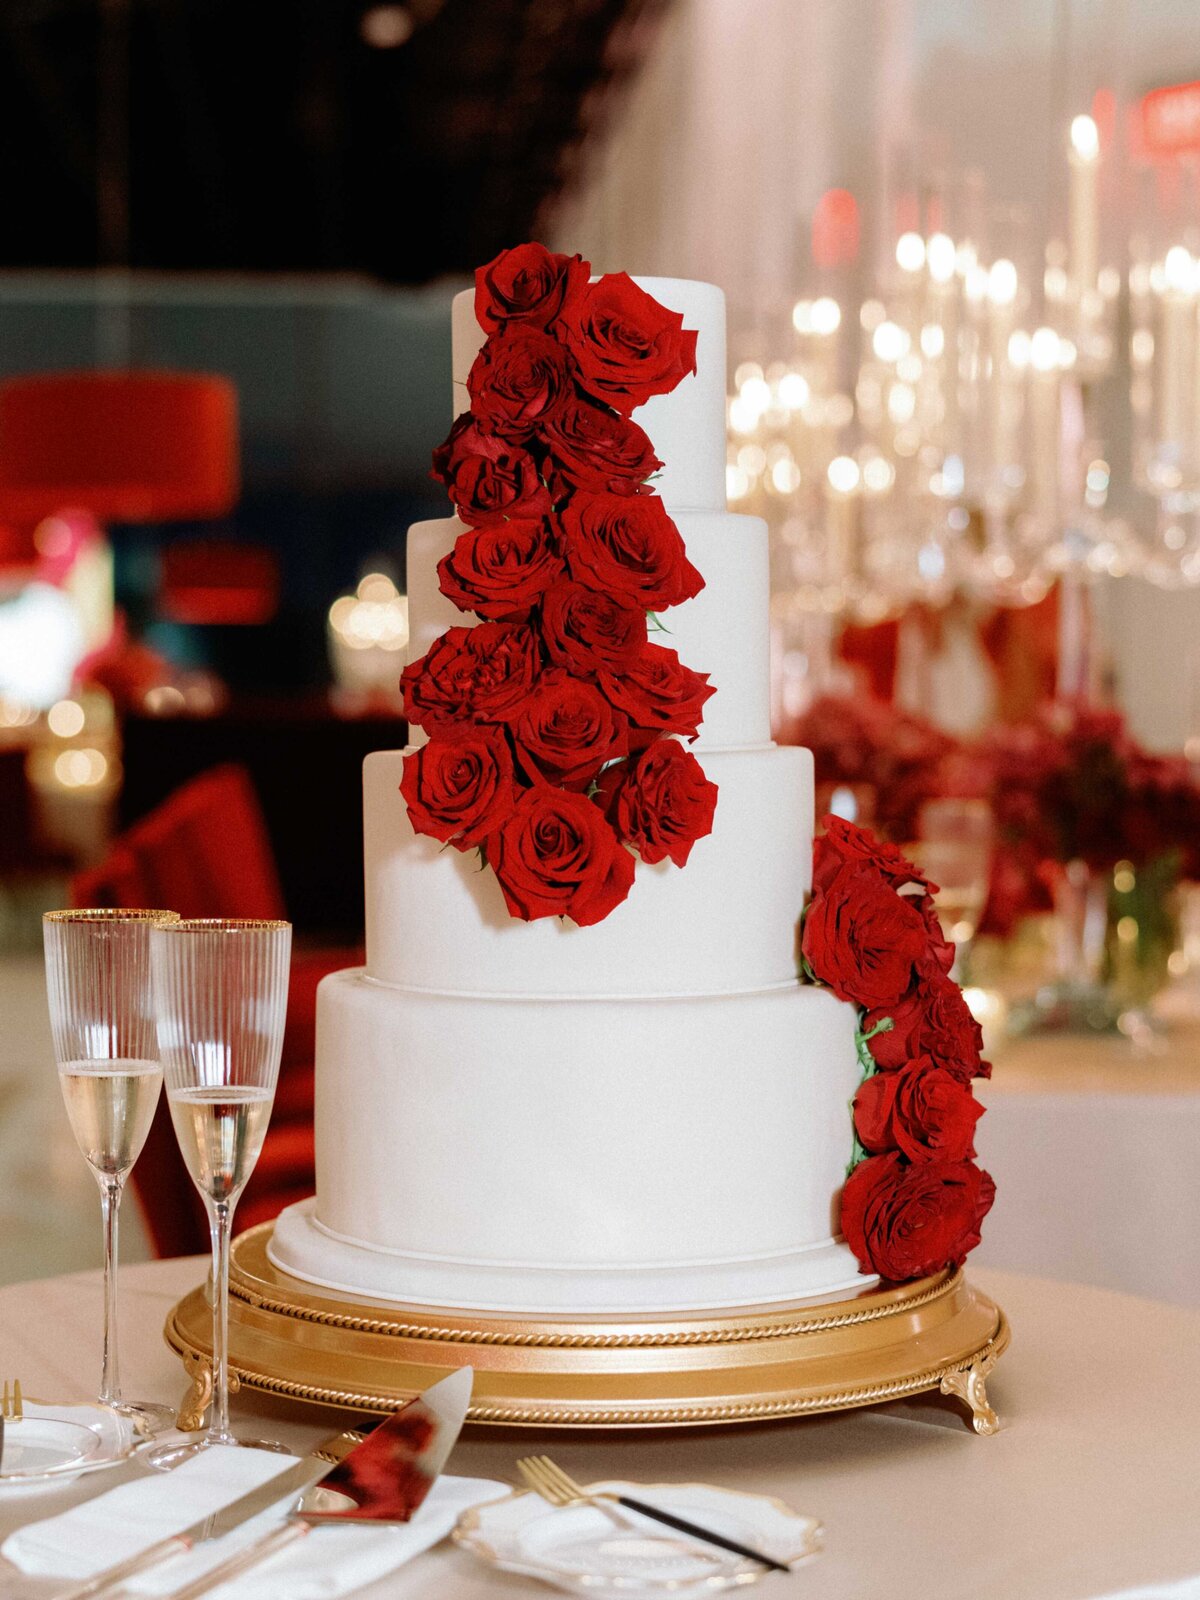 Miami Faena Wedding Cake with Roses TTWD